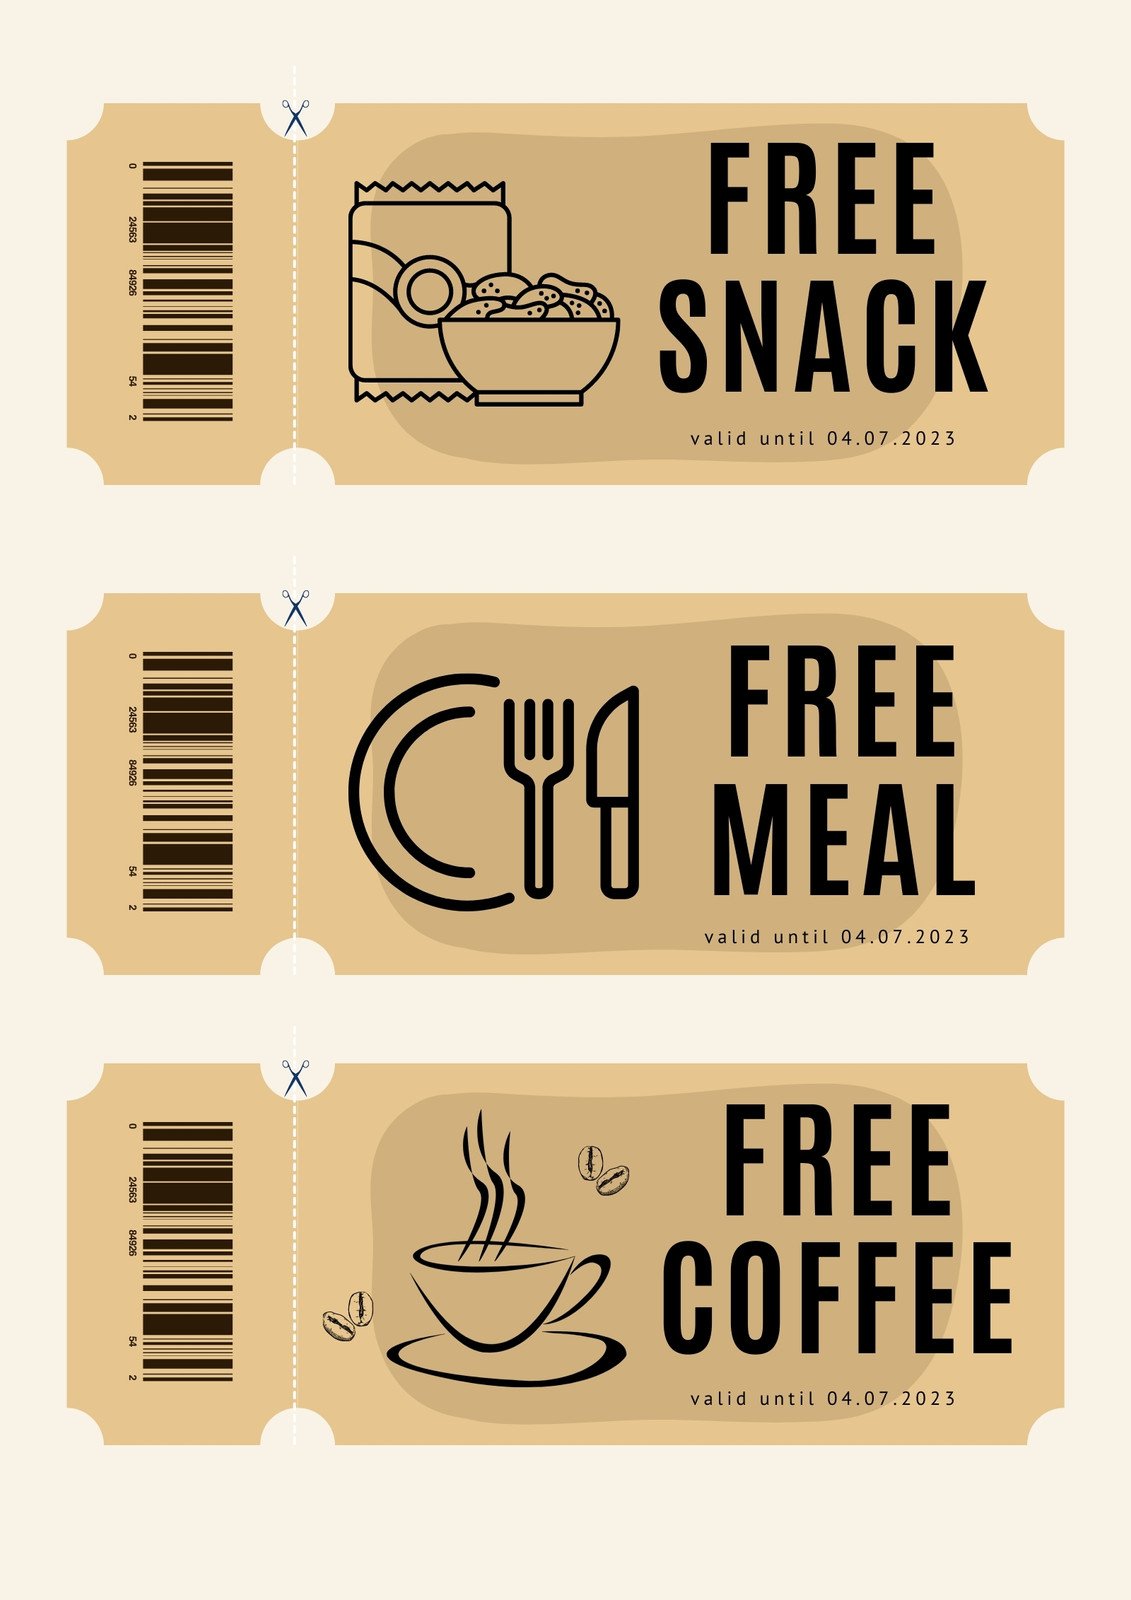 Sample Free Food Coupons